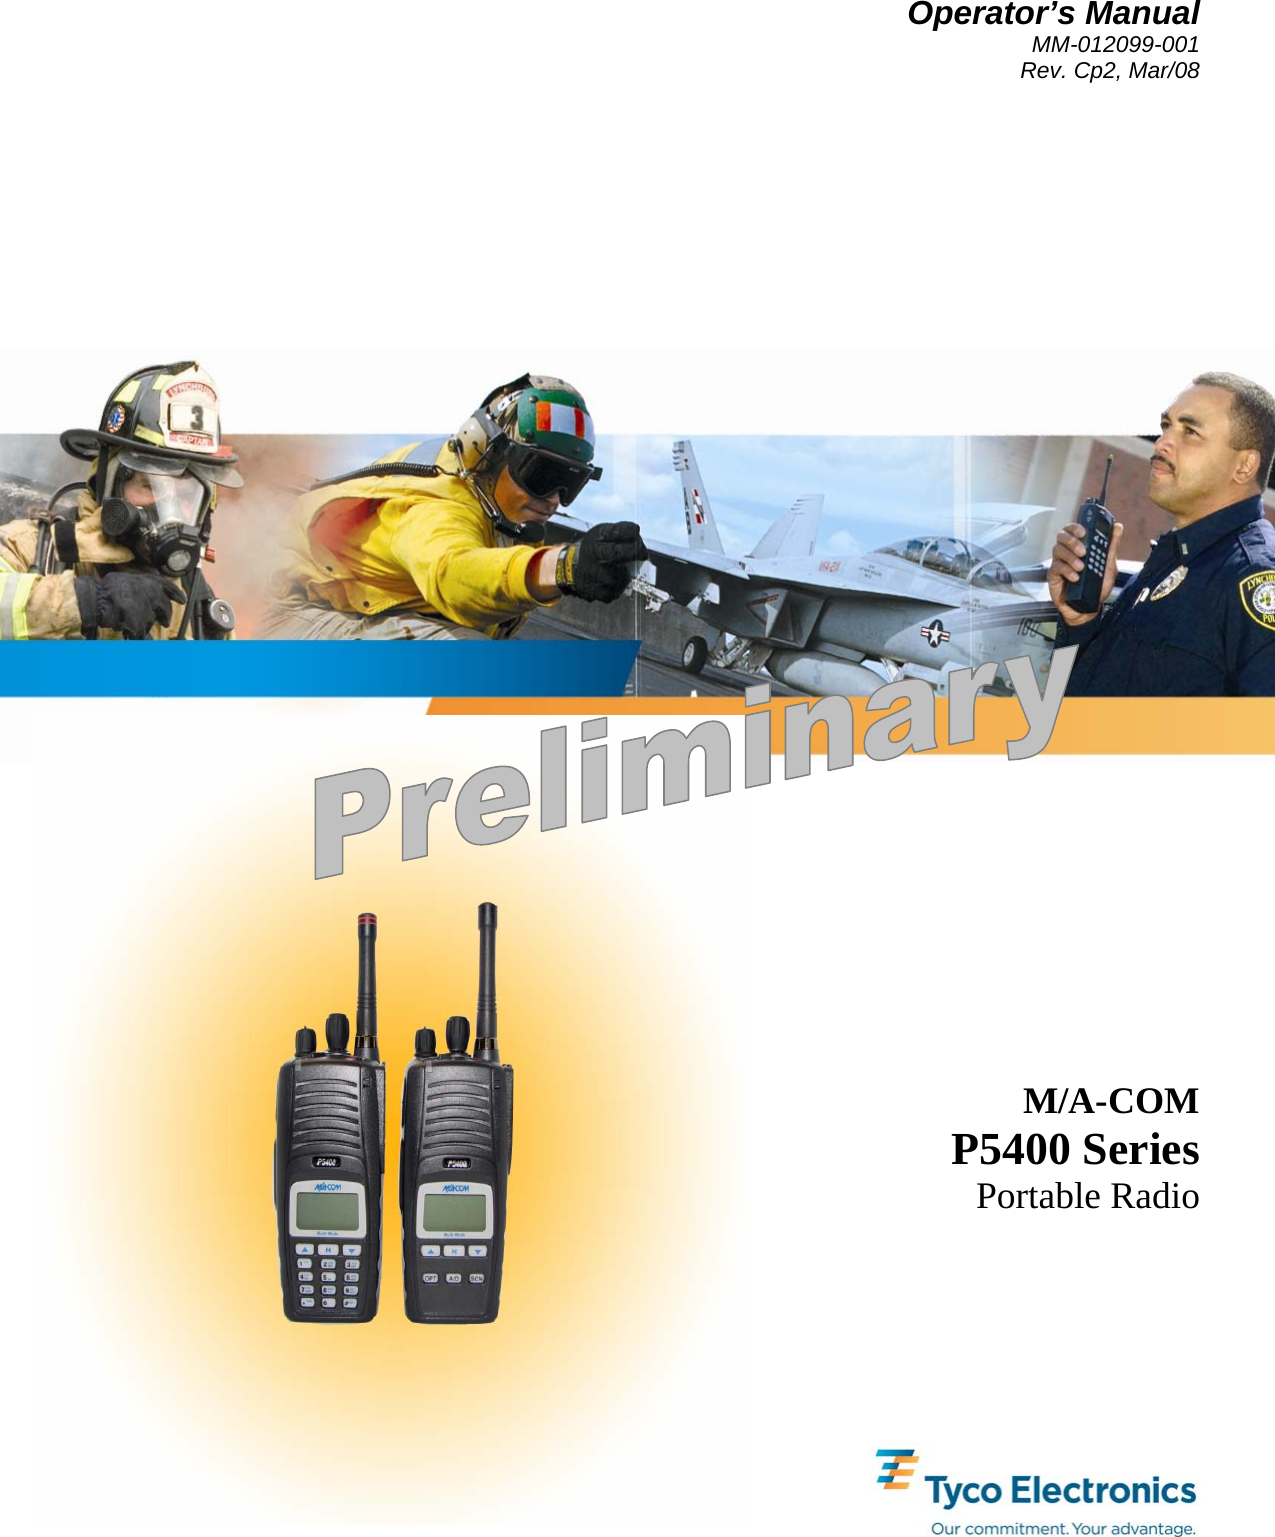 Operator’s Manual MM-012099-001 Rev. Cp2, Mar/08        M/A-COM P5400 Series Portable Radio 